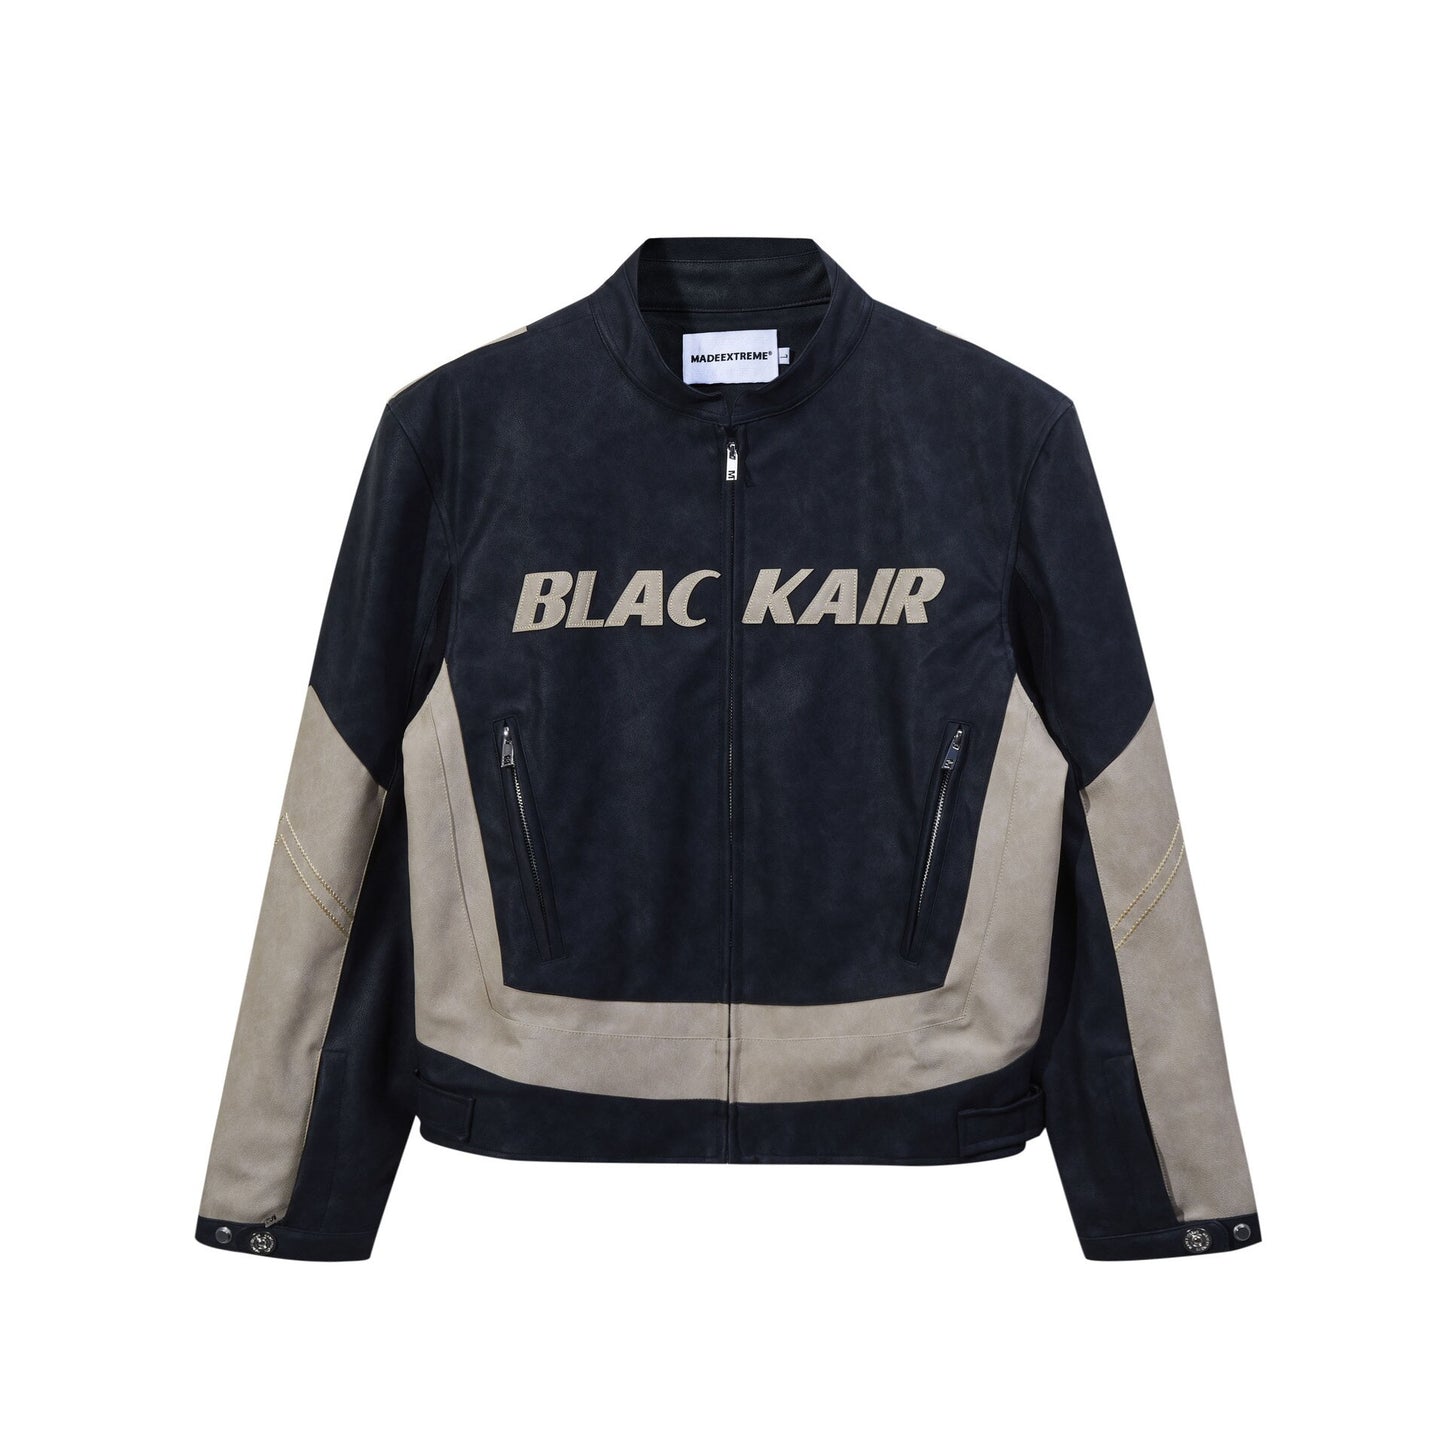 BLACKAIR Colour Block Racing Leather Biker Jacket